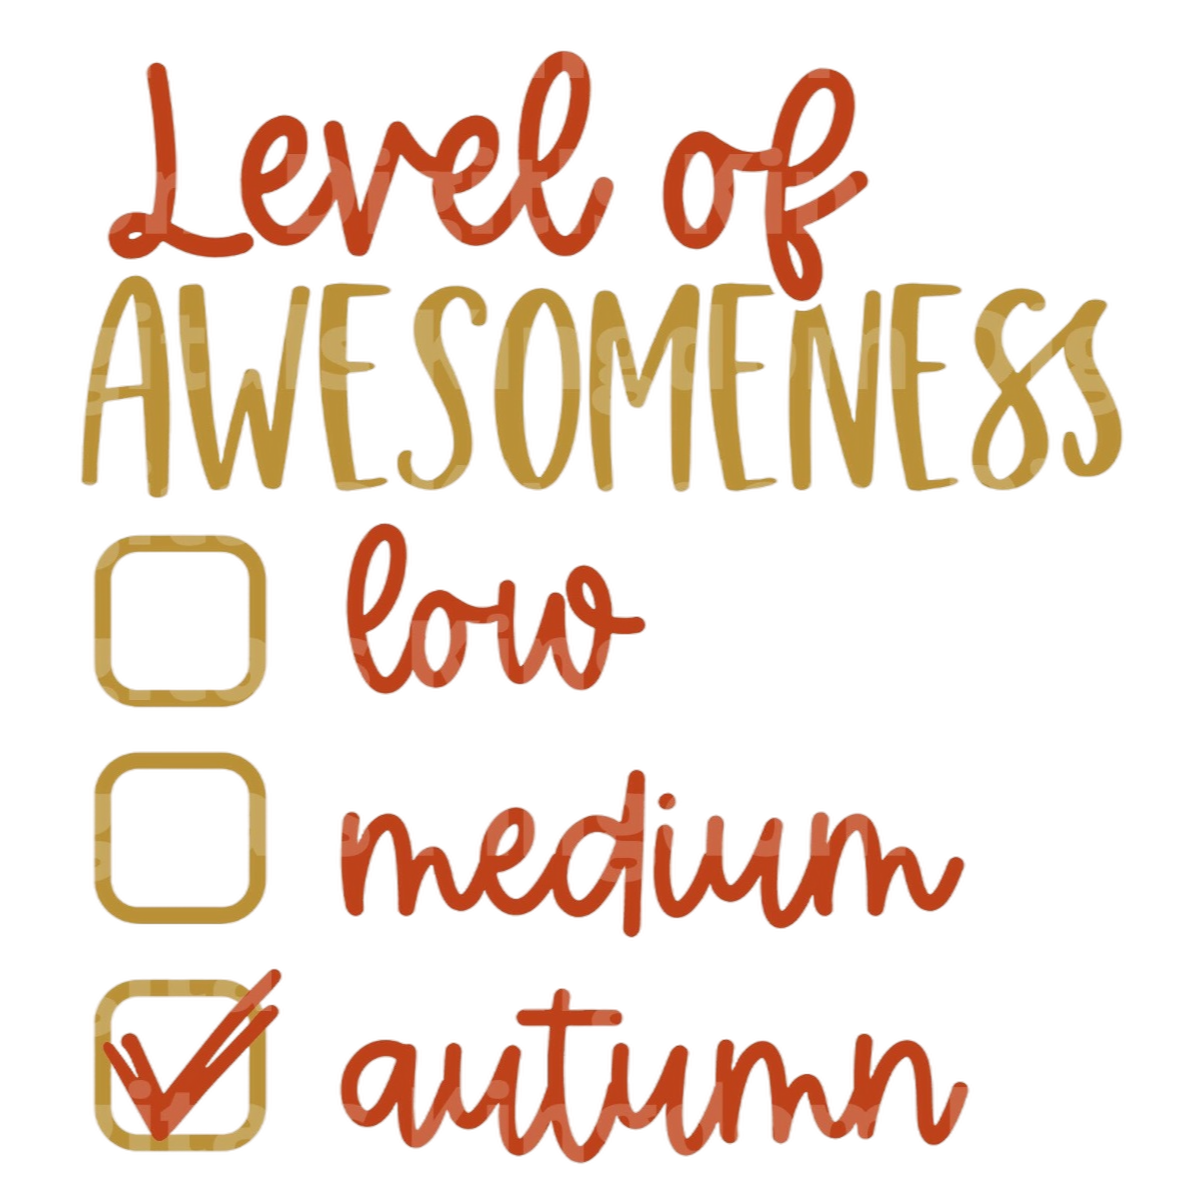 Level of awesomeness Low Medium Autumn SVG Cut File